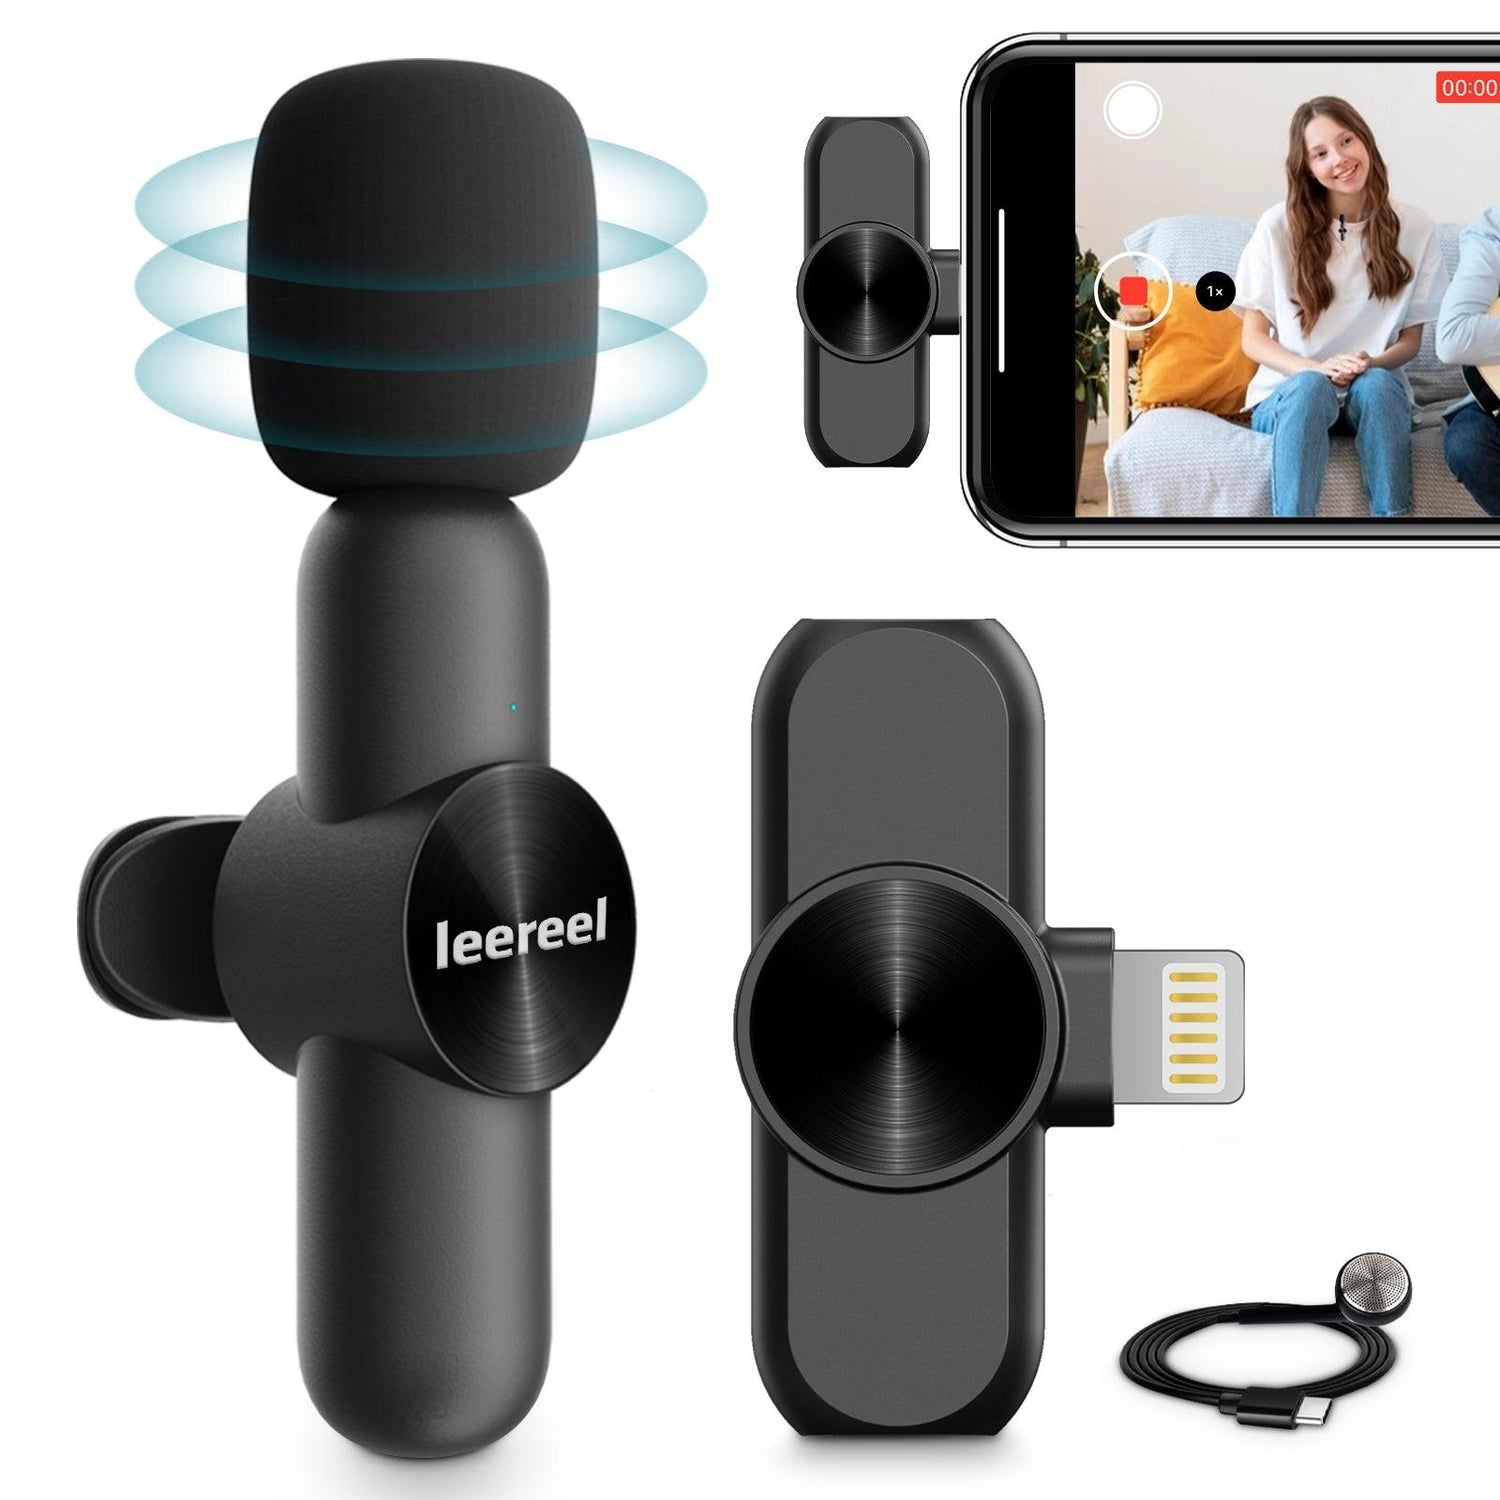 Leereel wireless lavalier microphone for iPhone